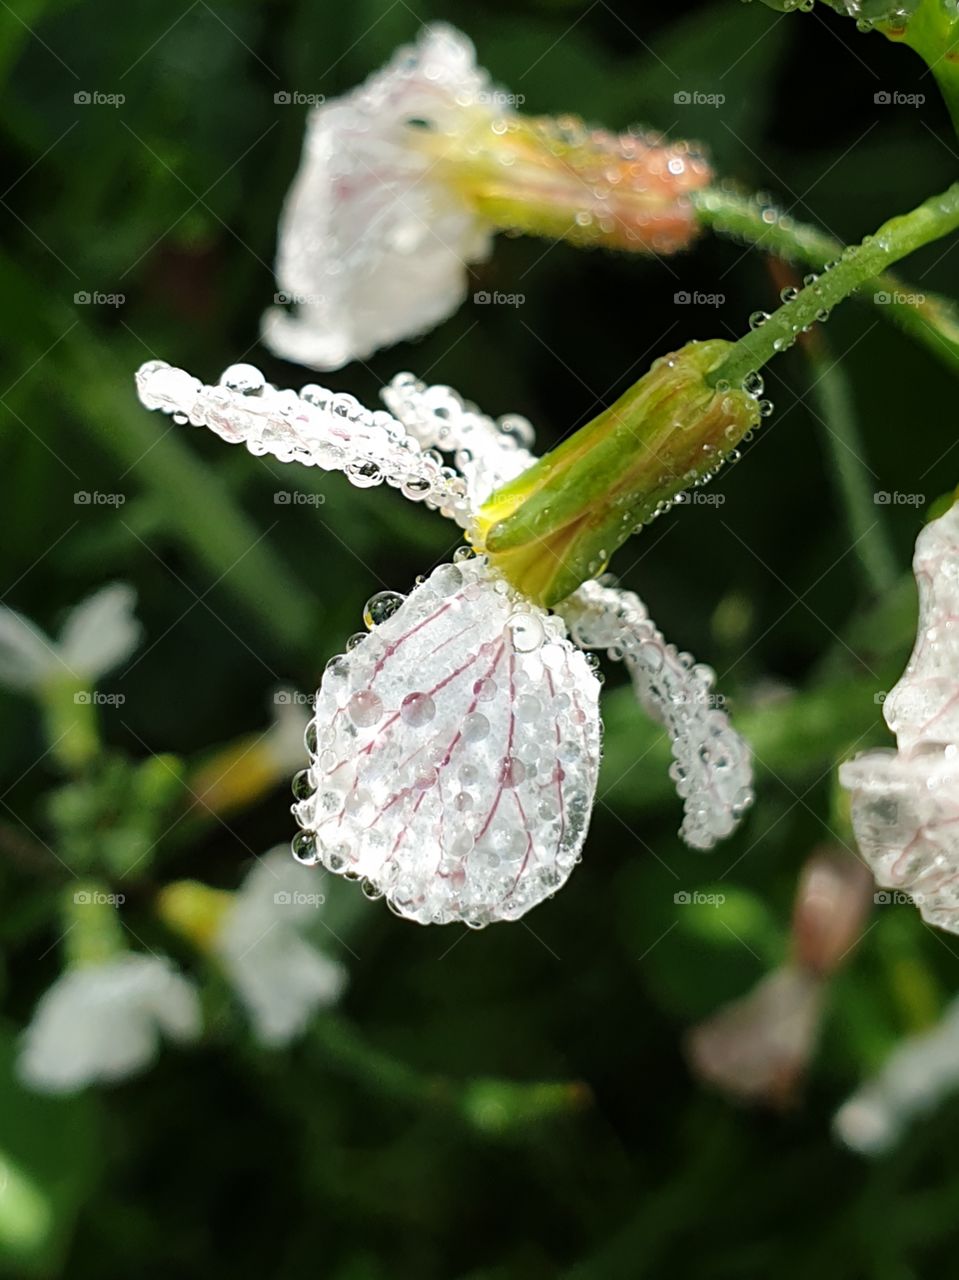 Small radishflowers with dew on them.